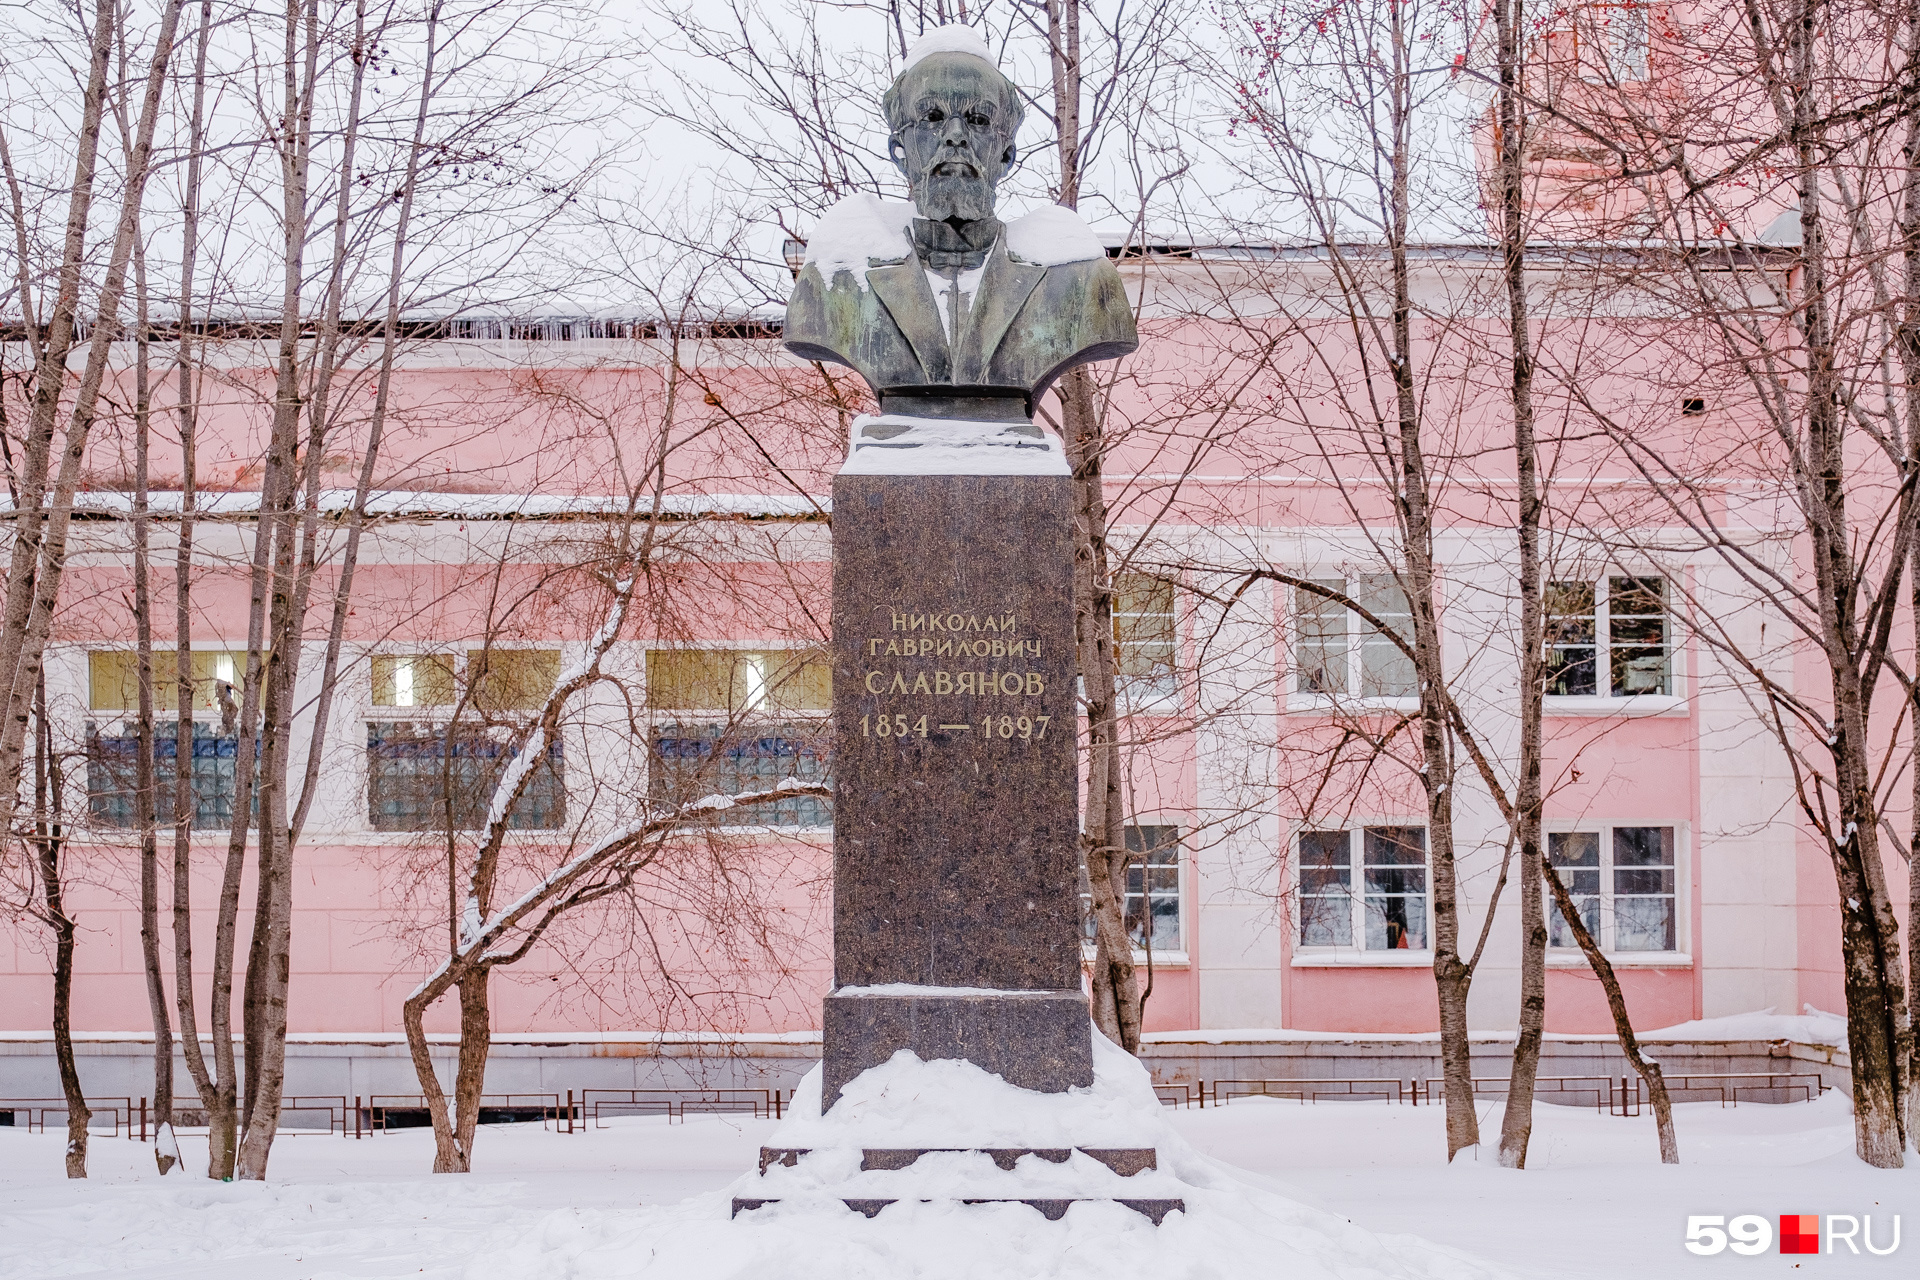 Перед колледжем также установлен бюст Николая Славянова